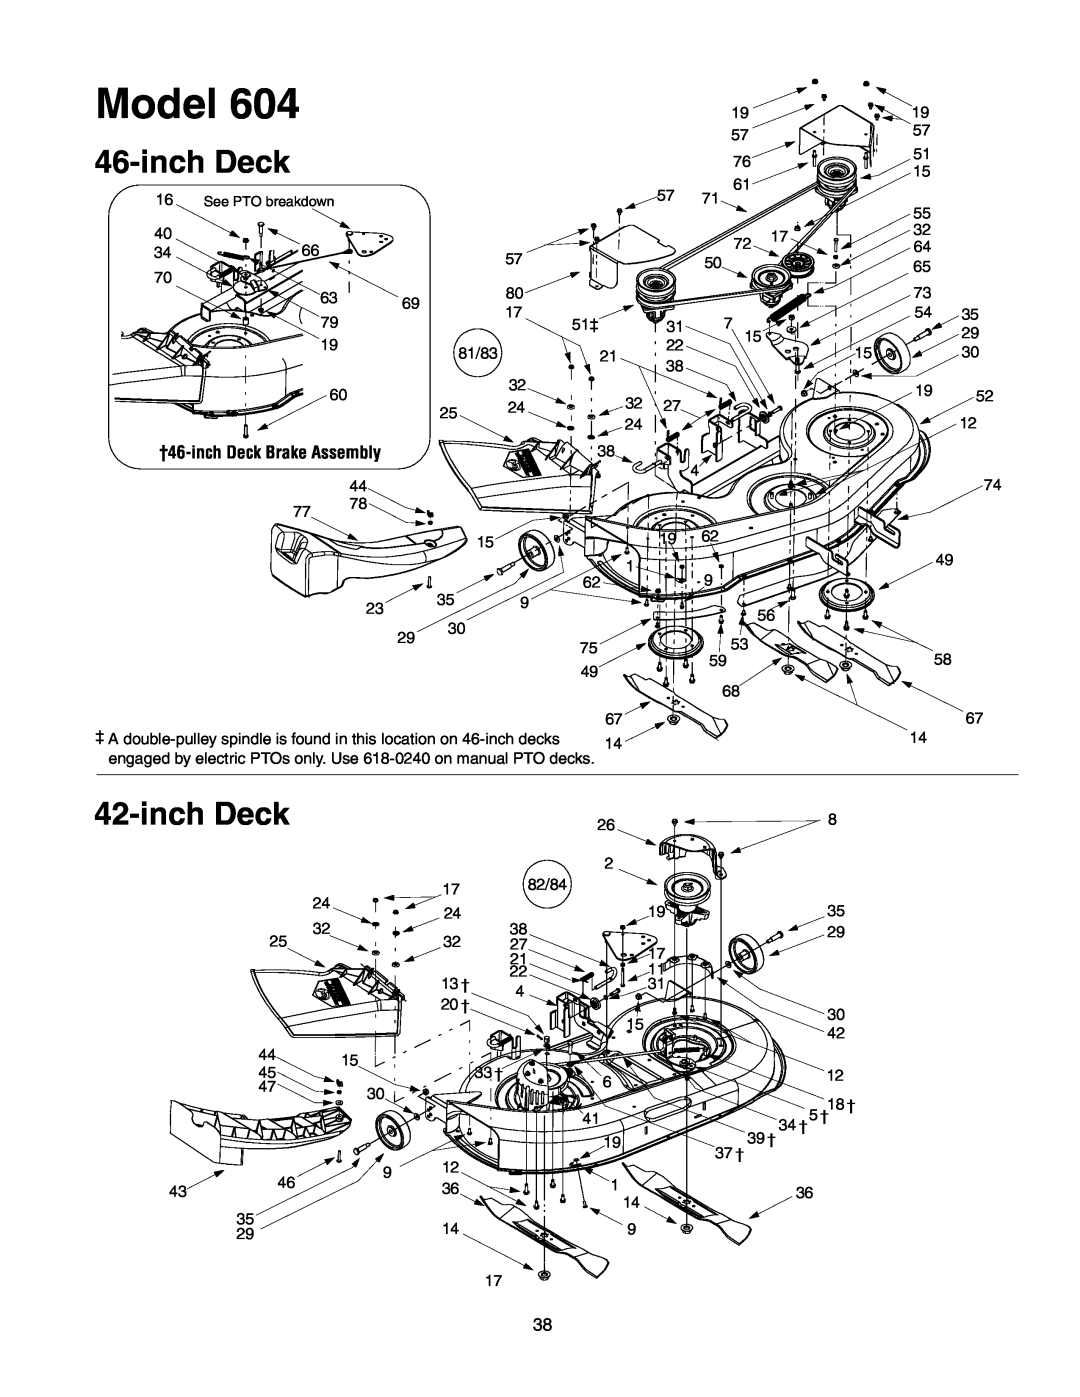 Yard-Man 604 manual †46-inchDeck Brake Assembly, Model 